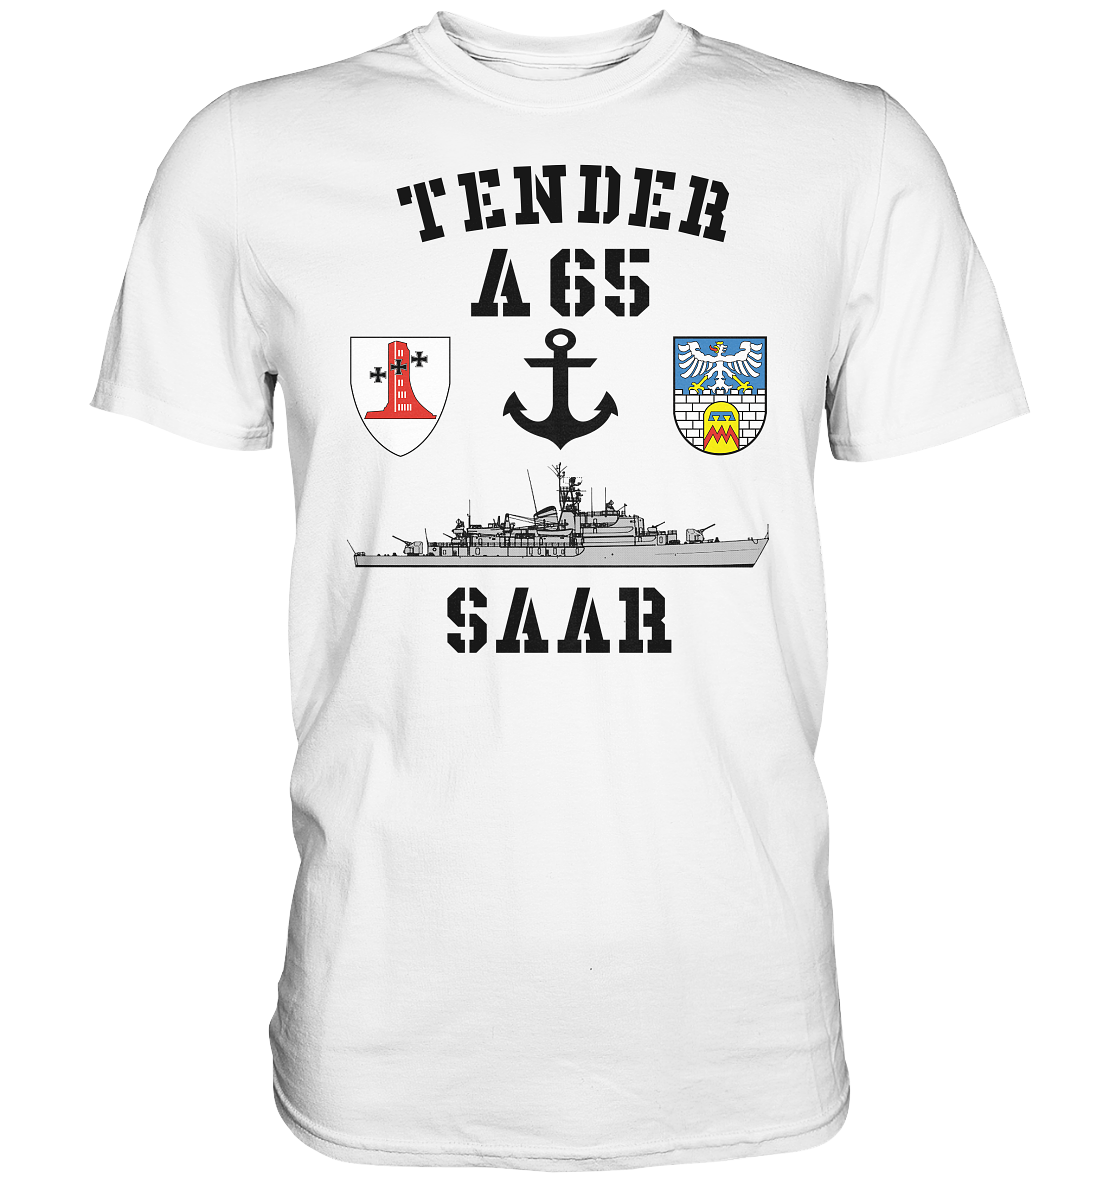 Tender A65 SAAR 1.MSG ANKER  - Premium Shirt